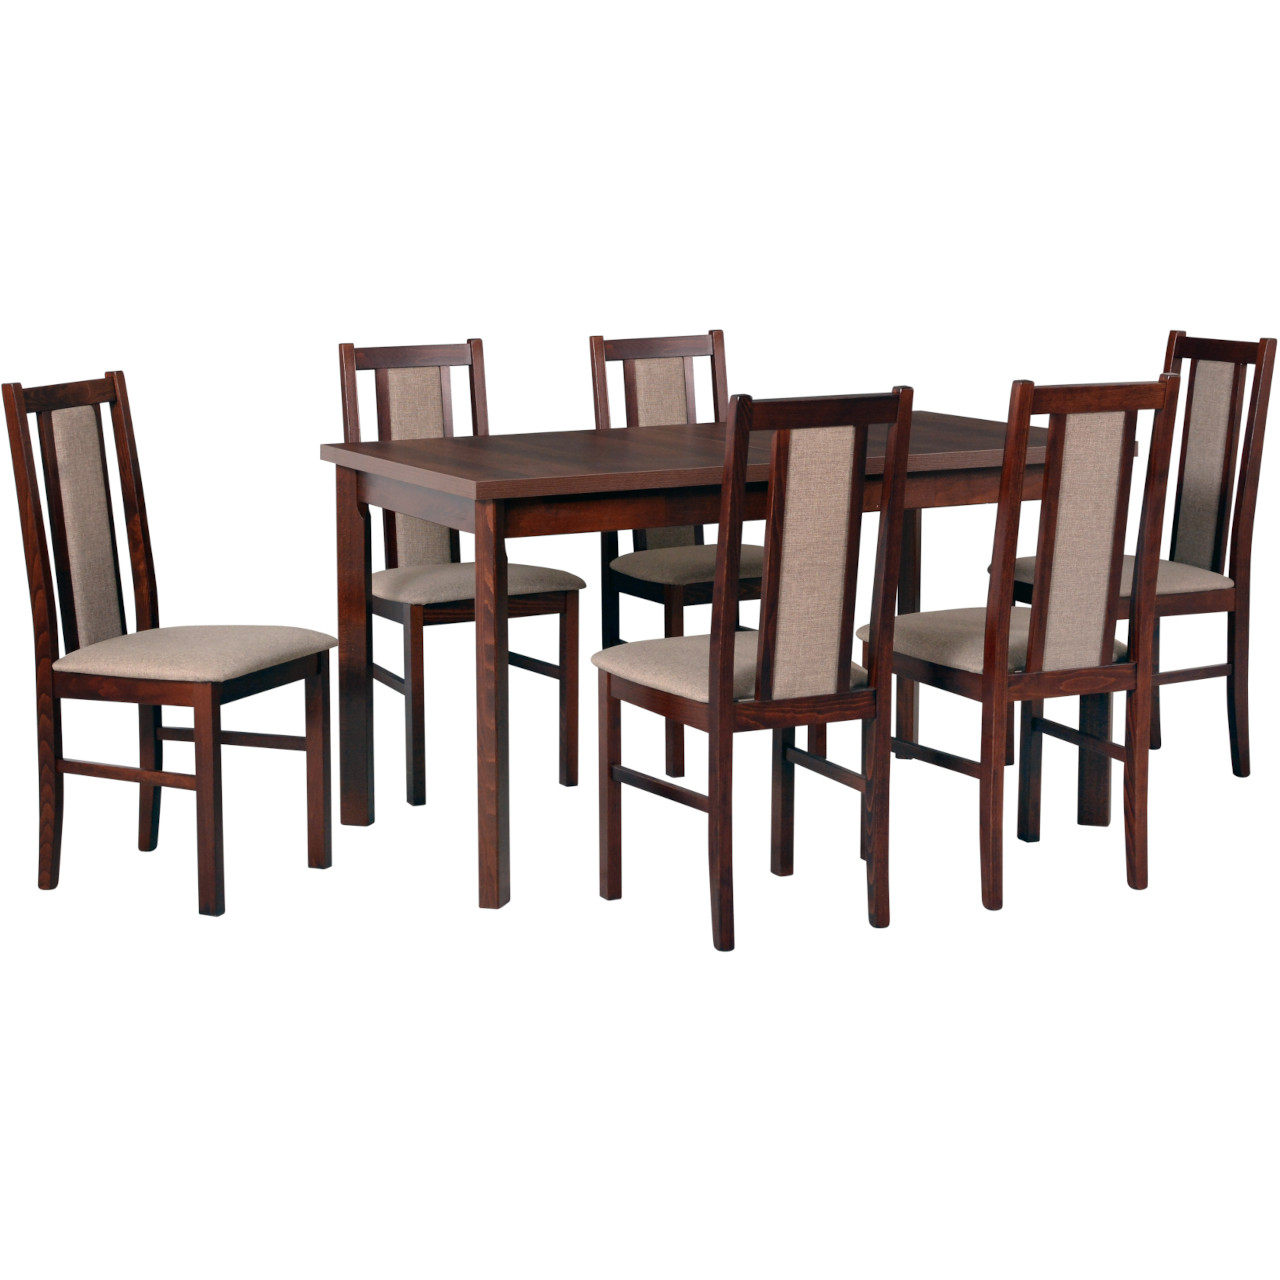 Table MODENA 1P walnut laminate + chairs BOS 14 (6 pcs.) walnut / 6B